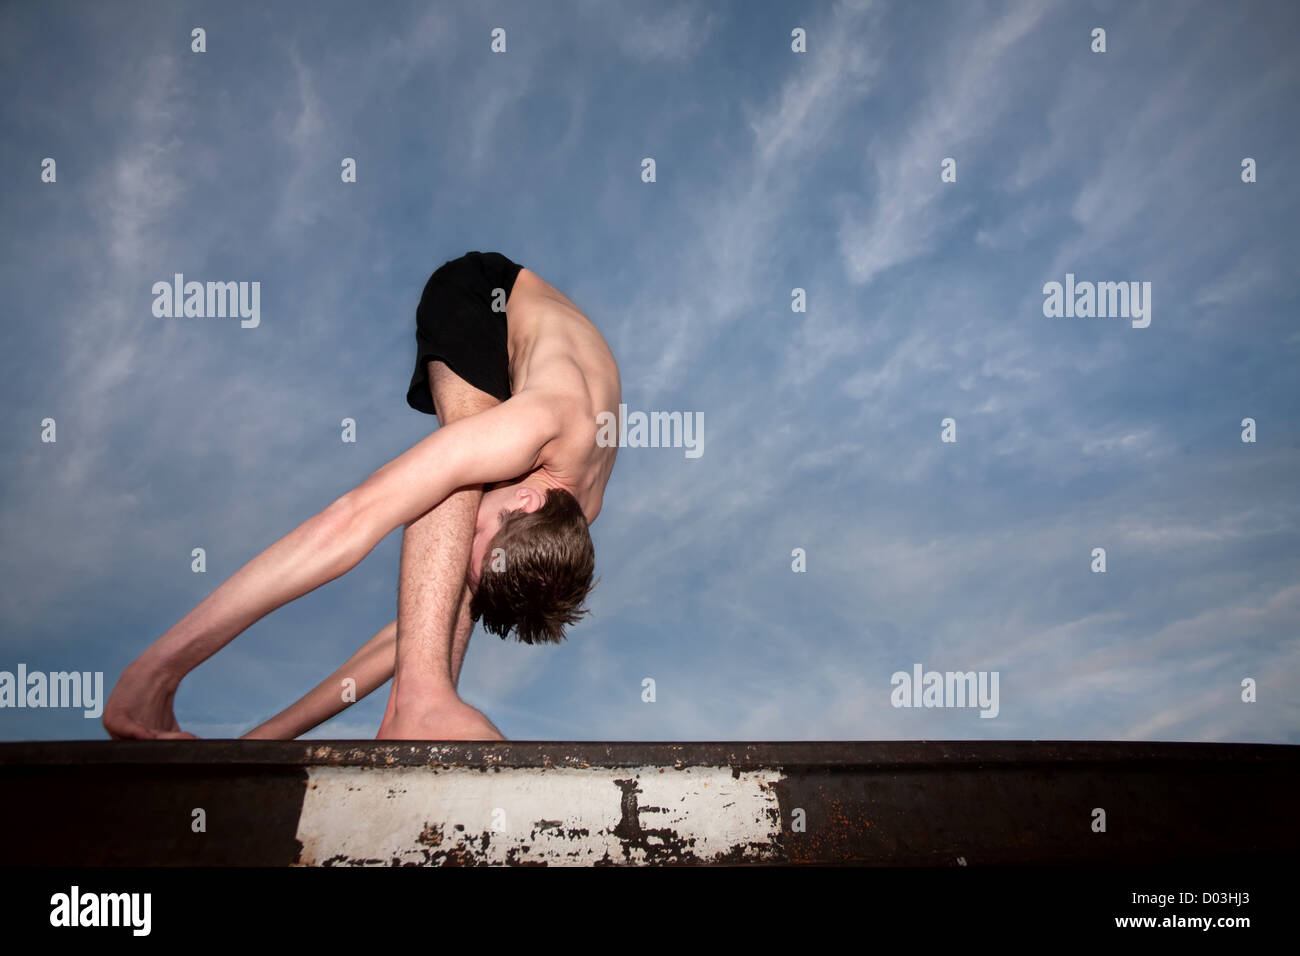 Extremely flexible yoga practitioner outside on rail track Stock Photo